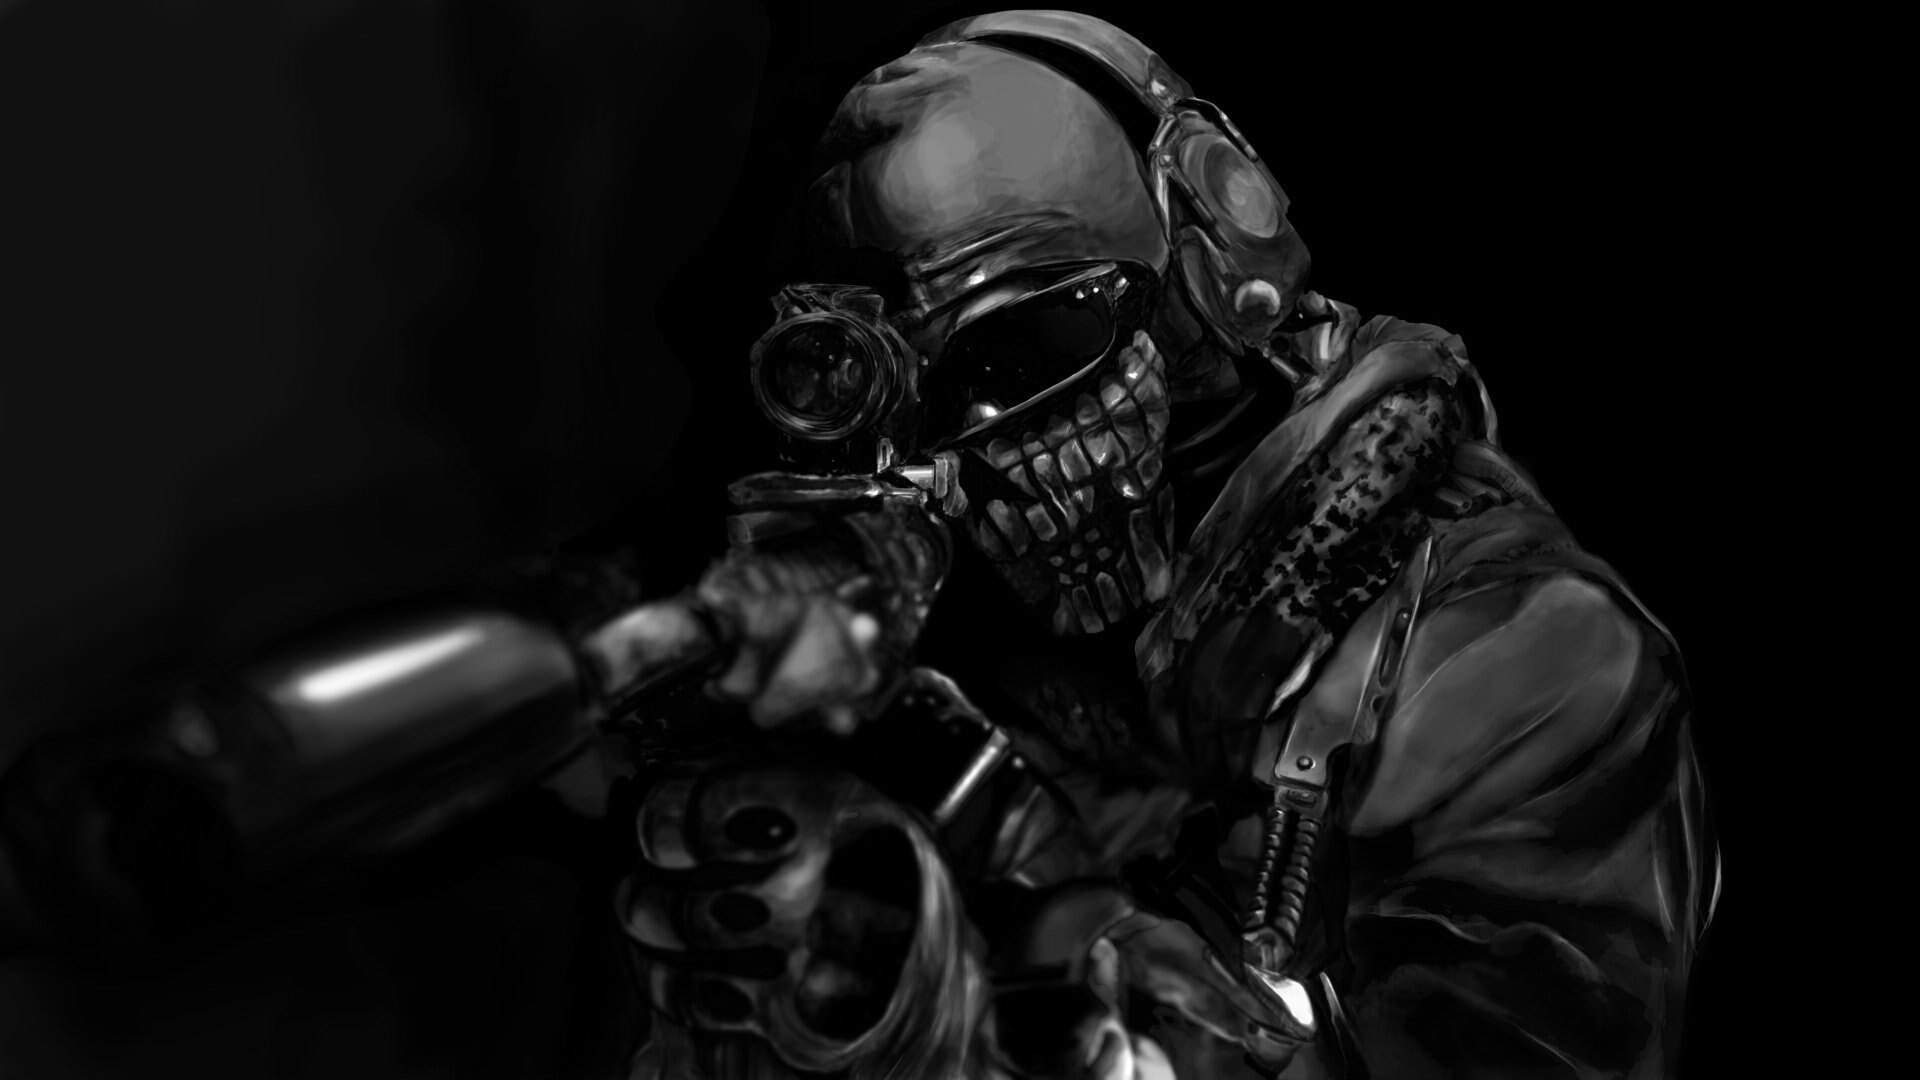 Steam 工作坊::Escape from Tarkov: Tactical MK18 MOD 0 (Black)SG552